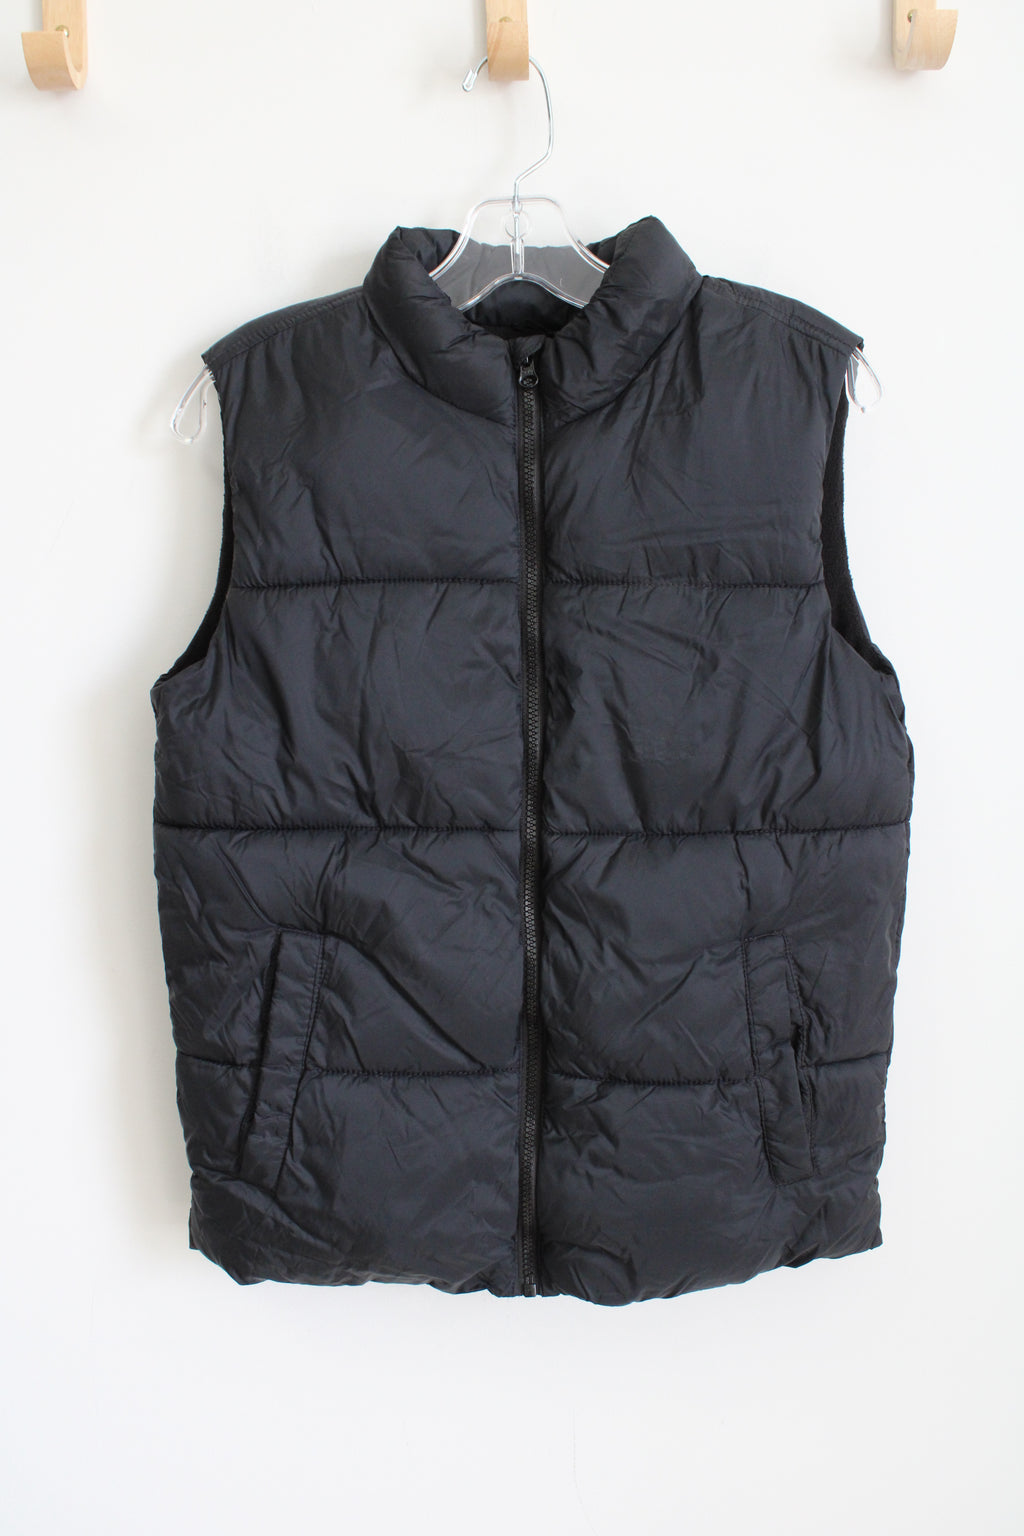 Old Navy Black Puffer Vest | XL